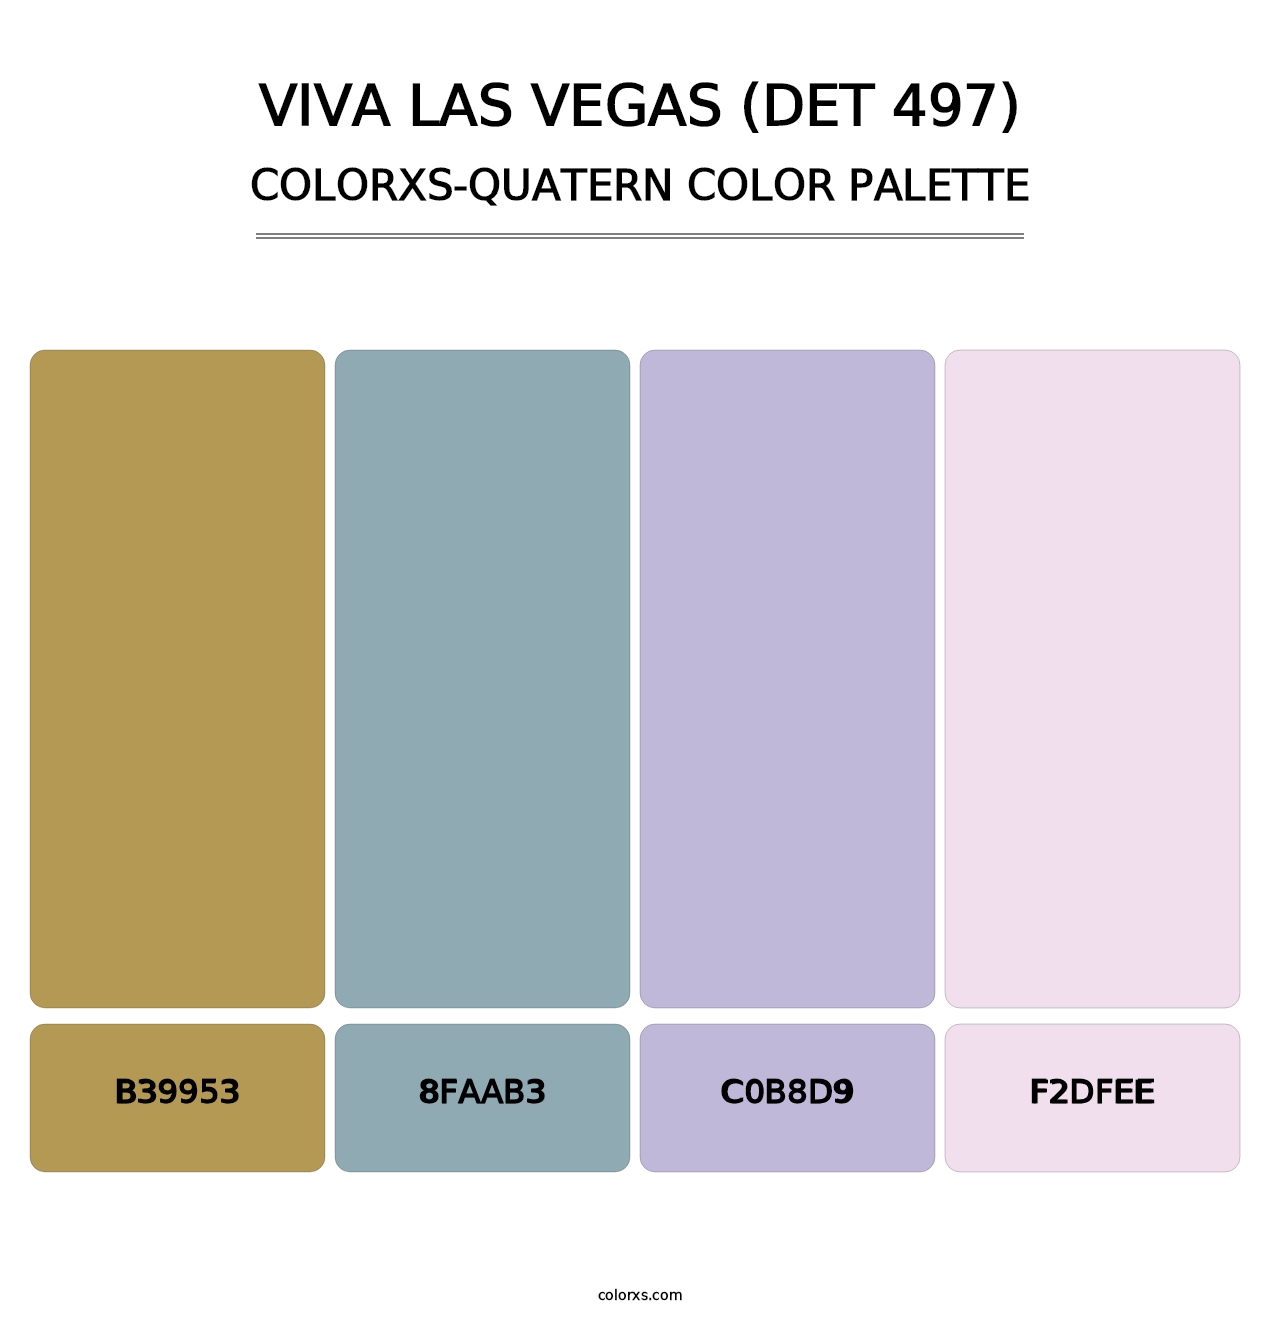 Viva Las Vegas (DET 497) - Colorxs Quatern Palette